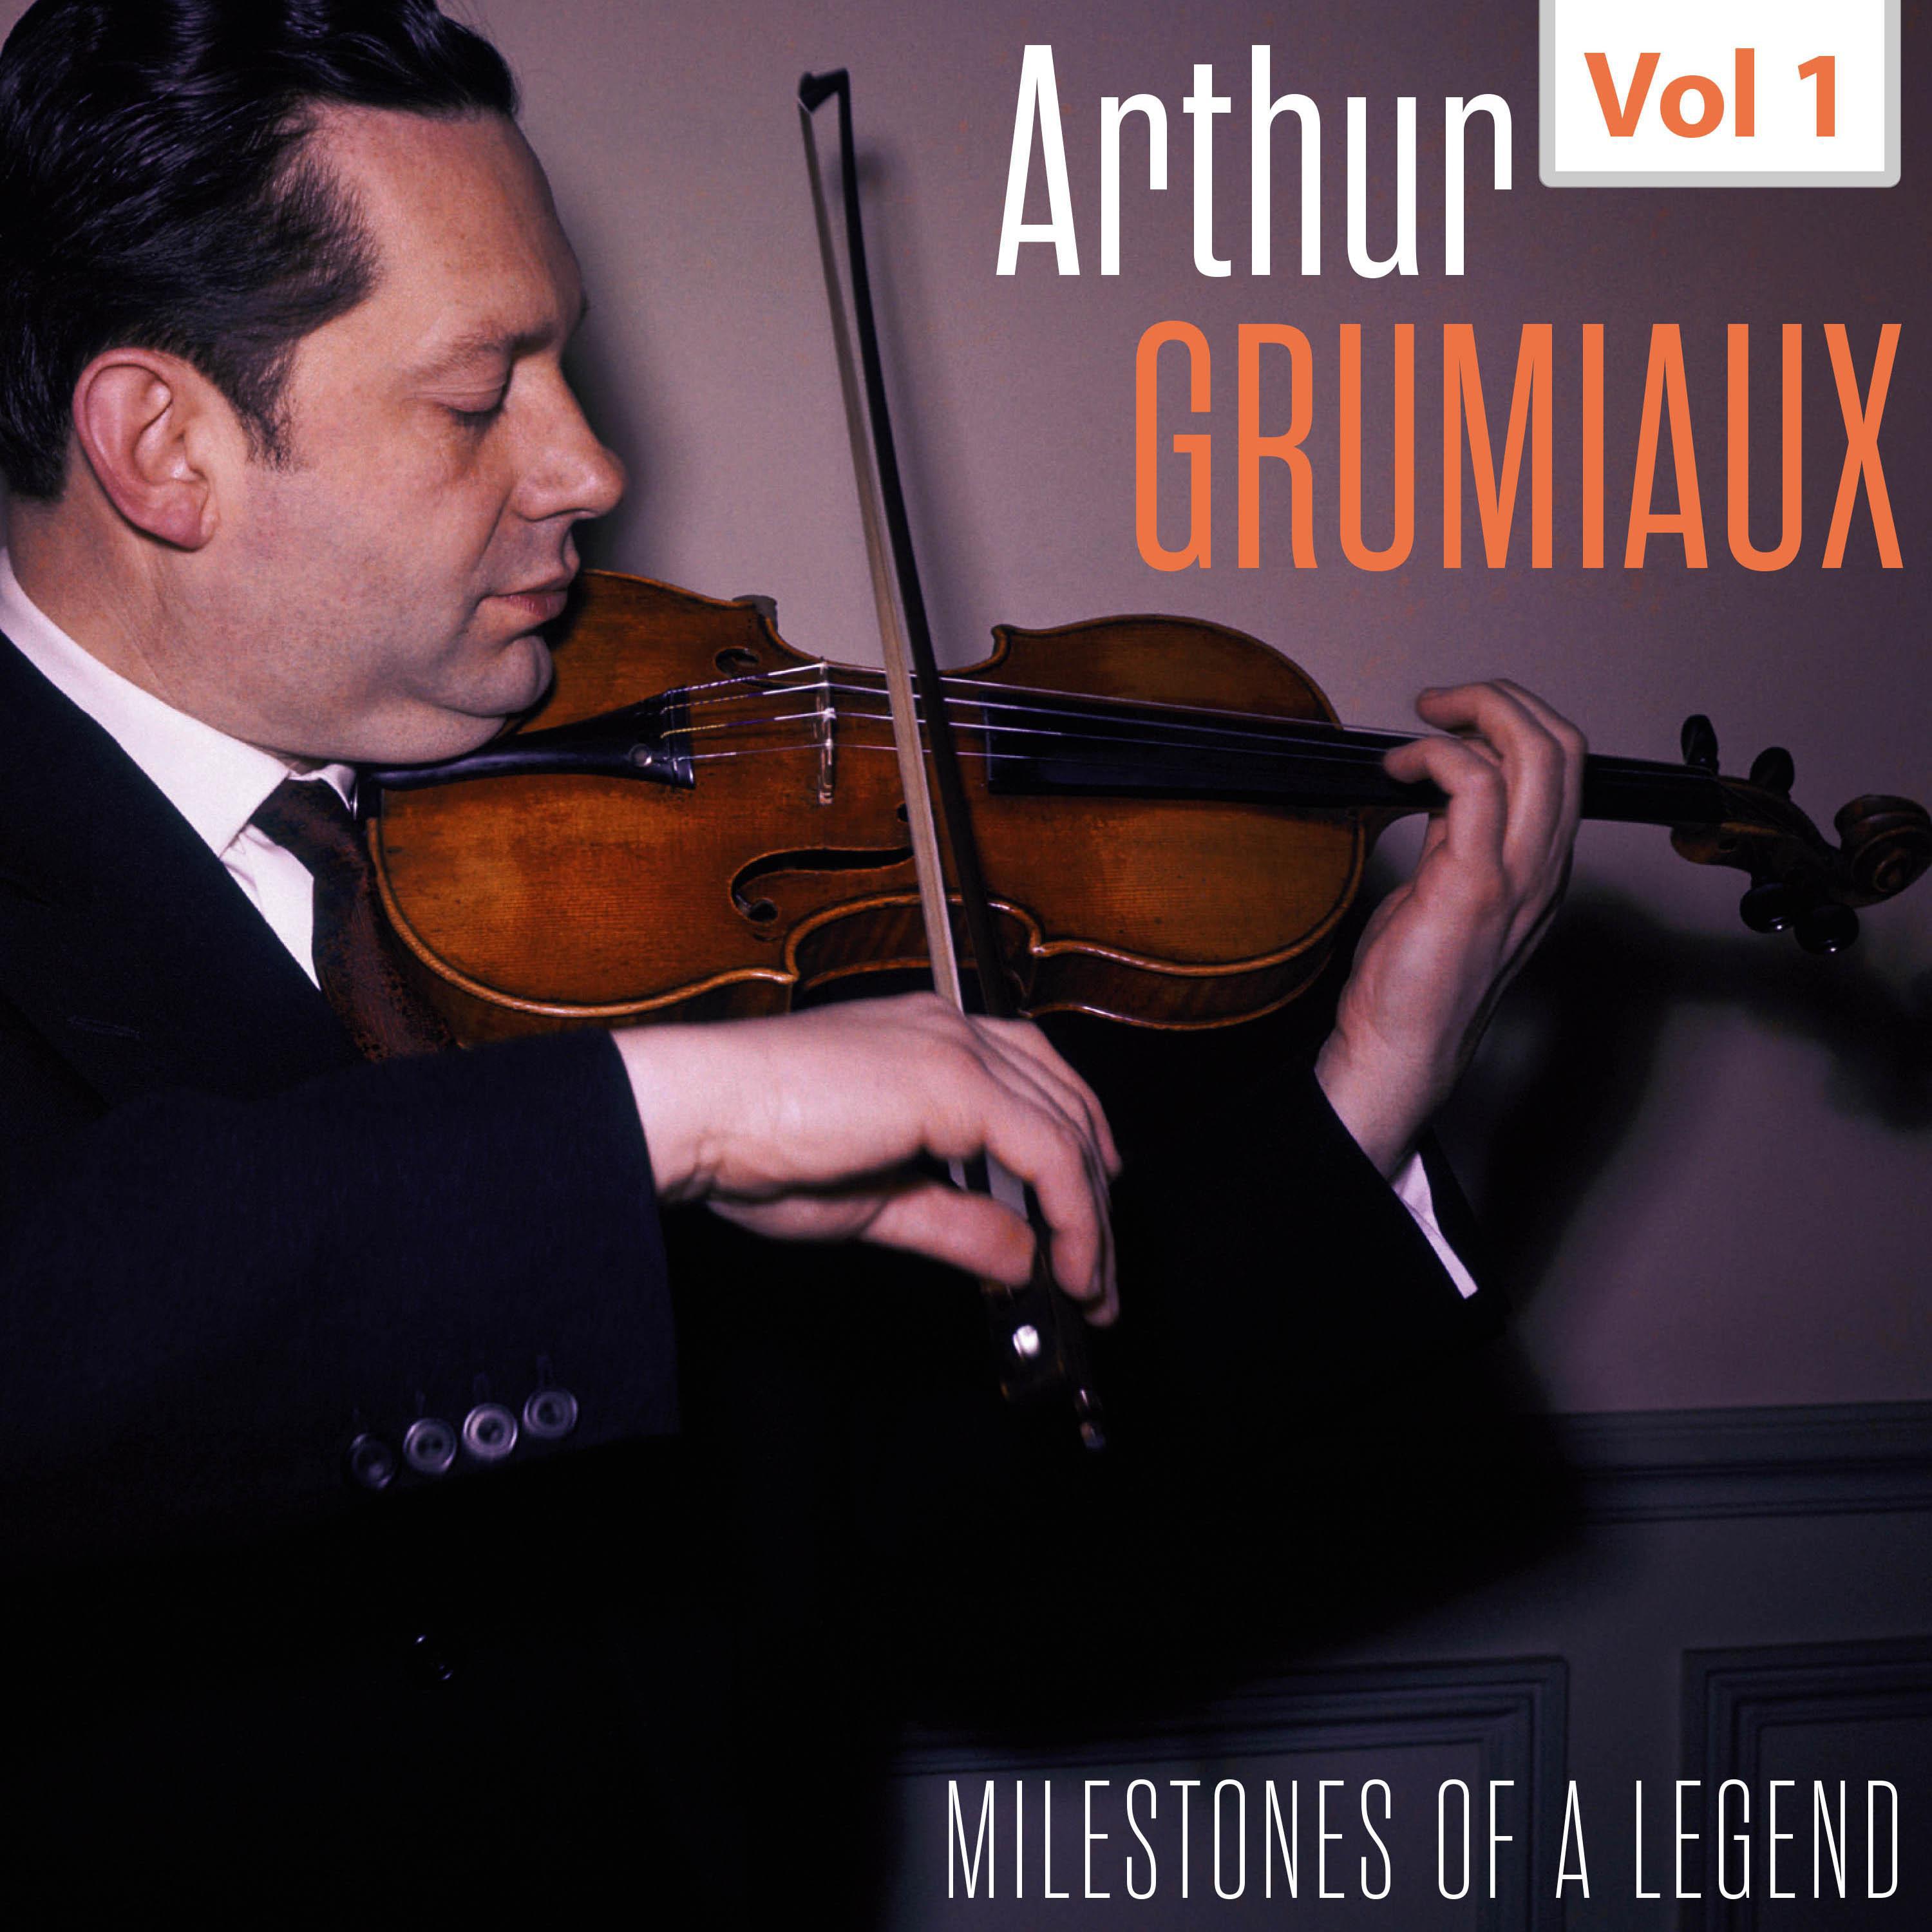 Milestones of a Legend - Arthur Grumiaux, Vol. 1专辑